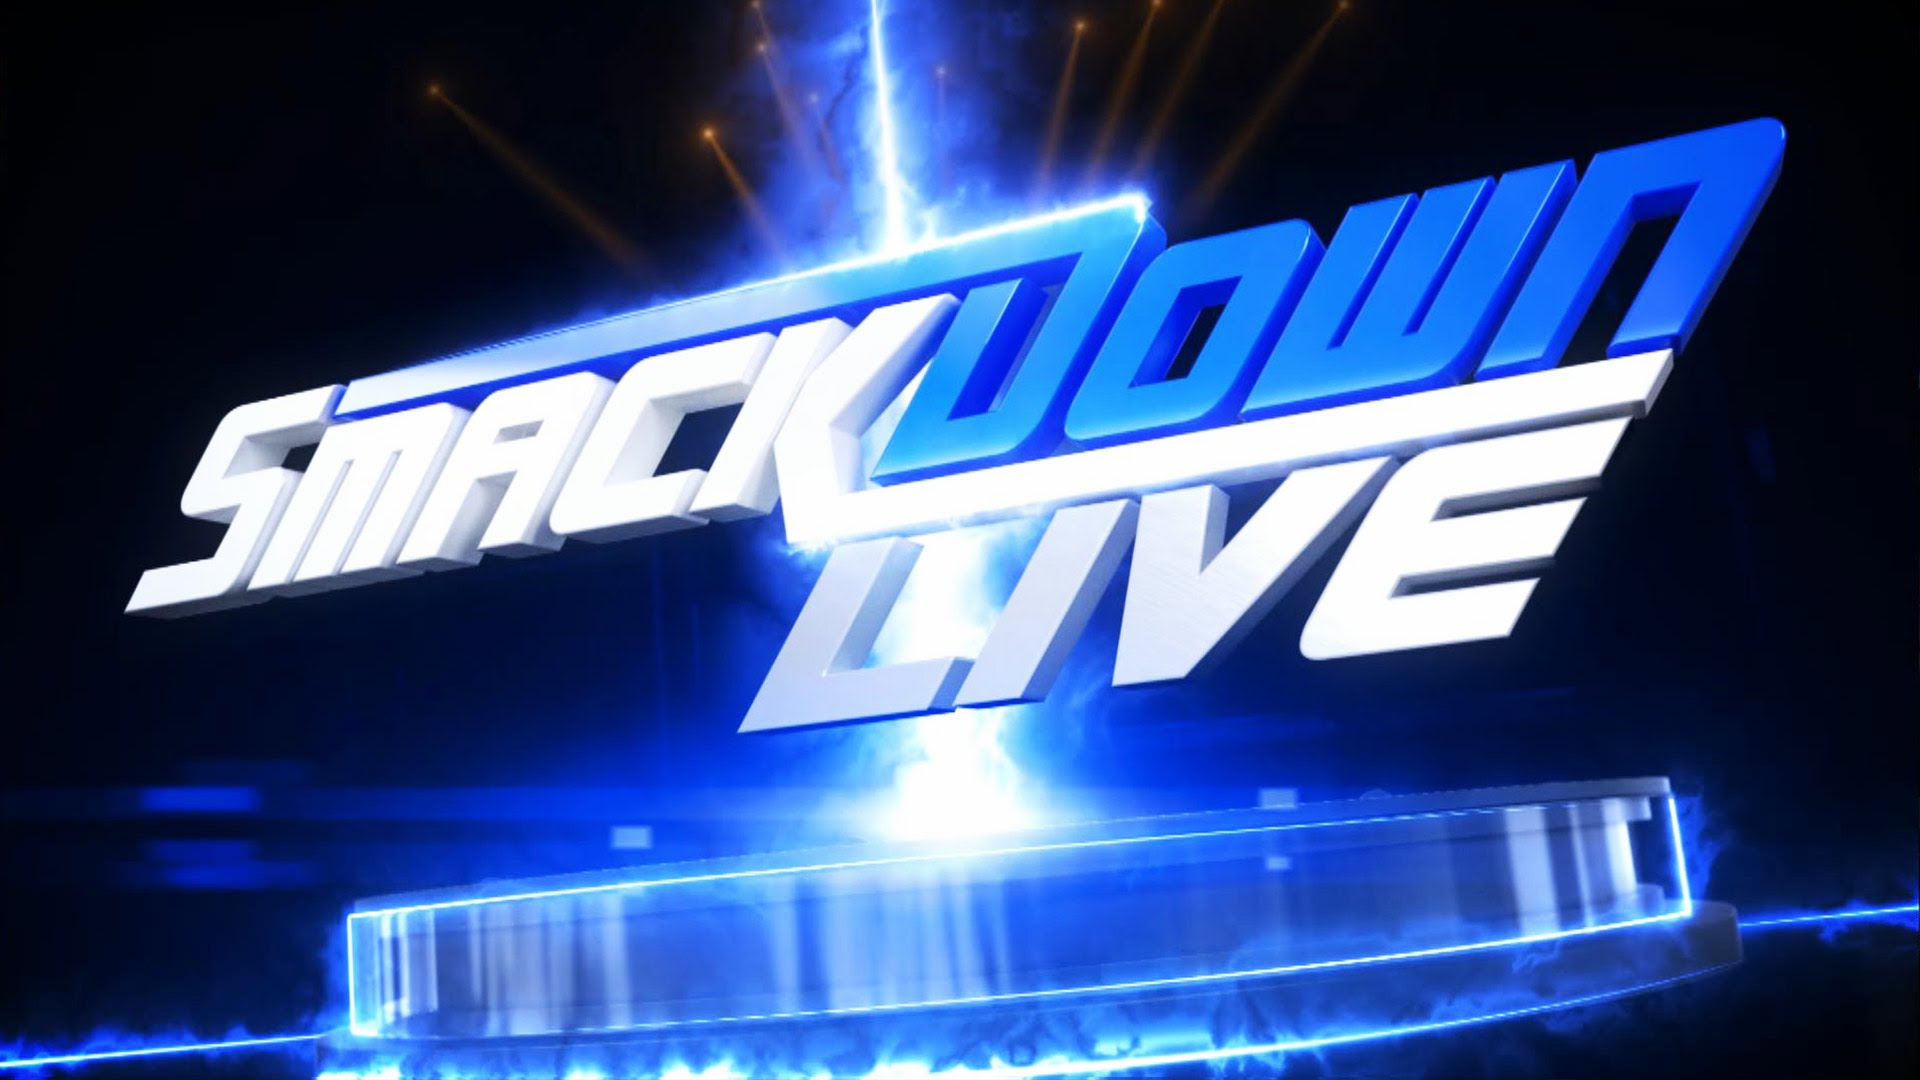 Smackdown Live Logos